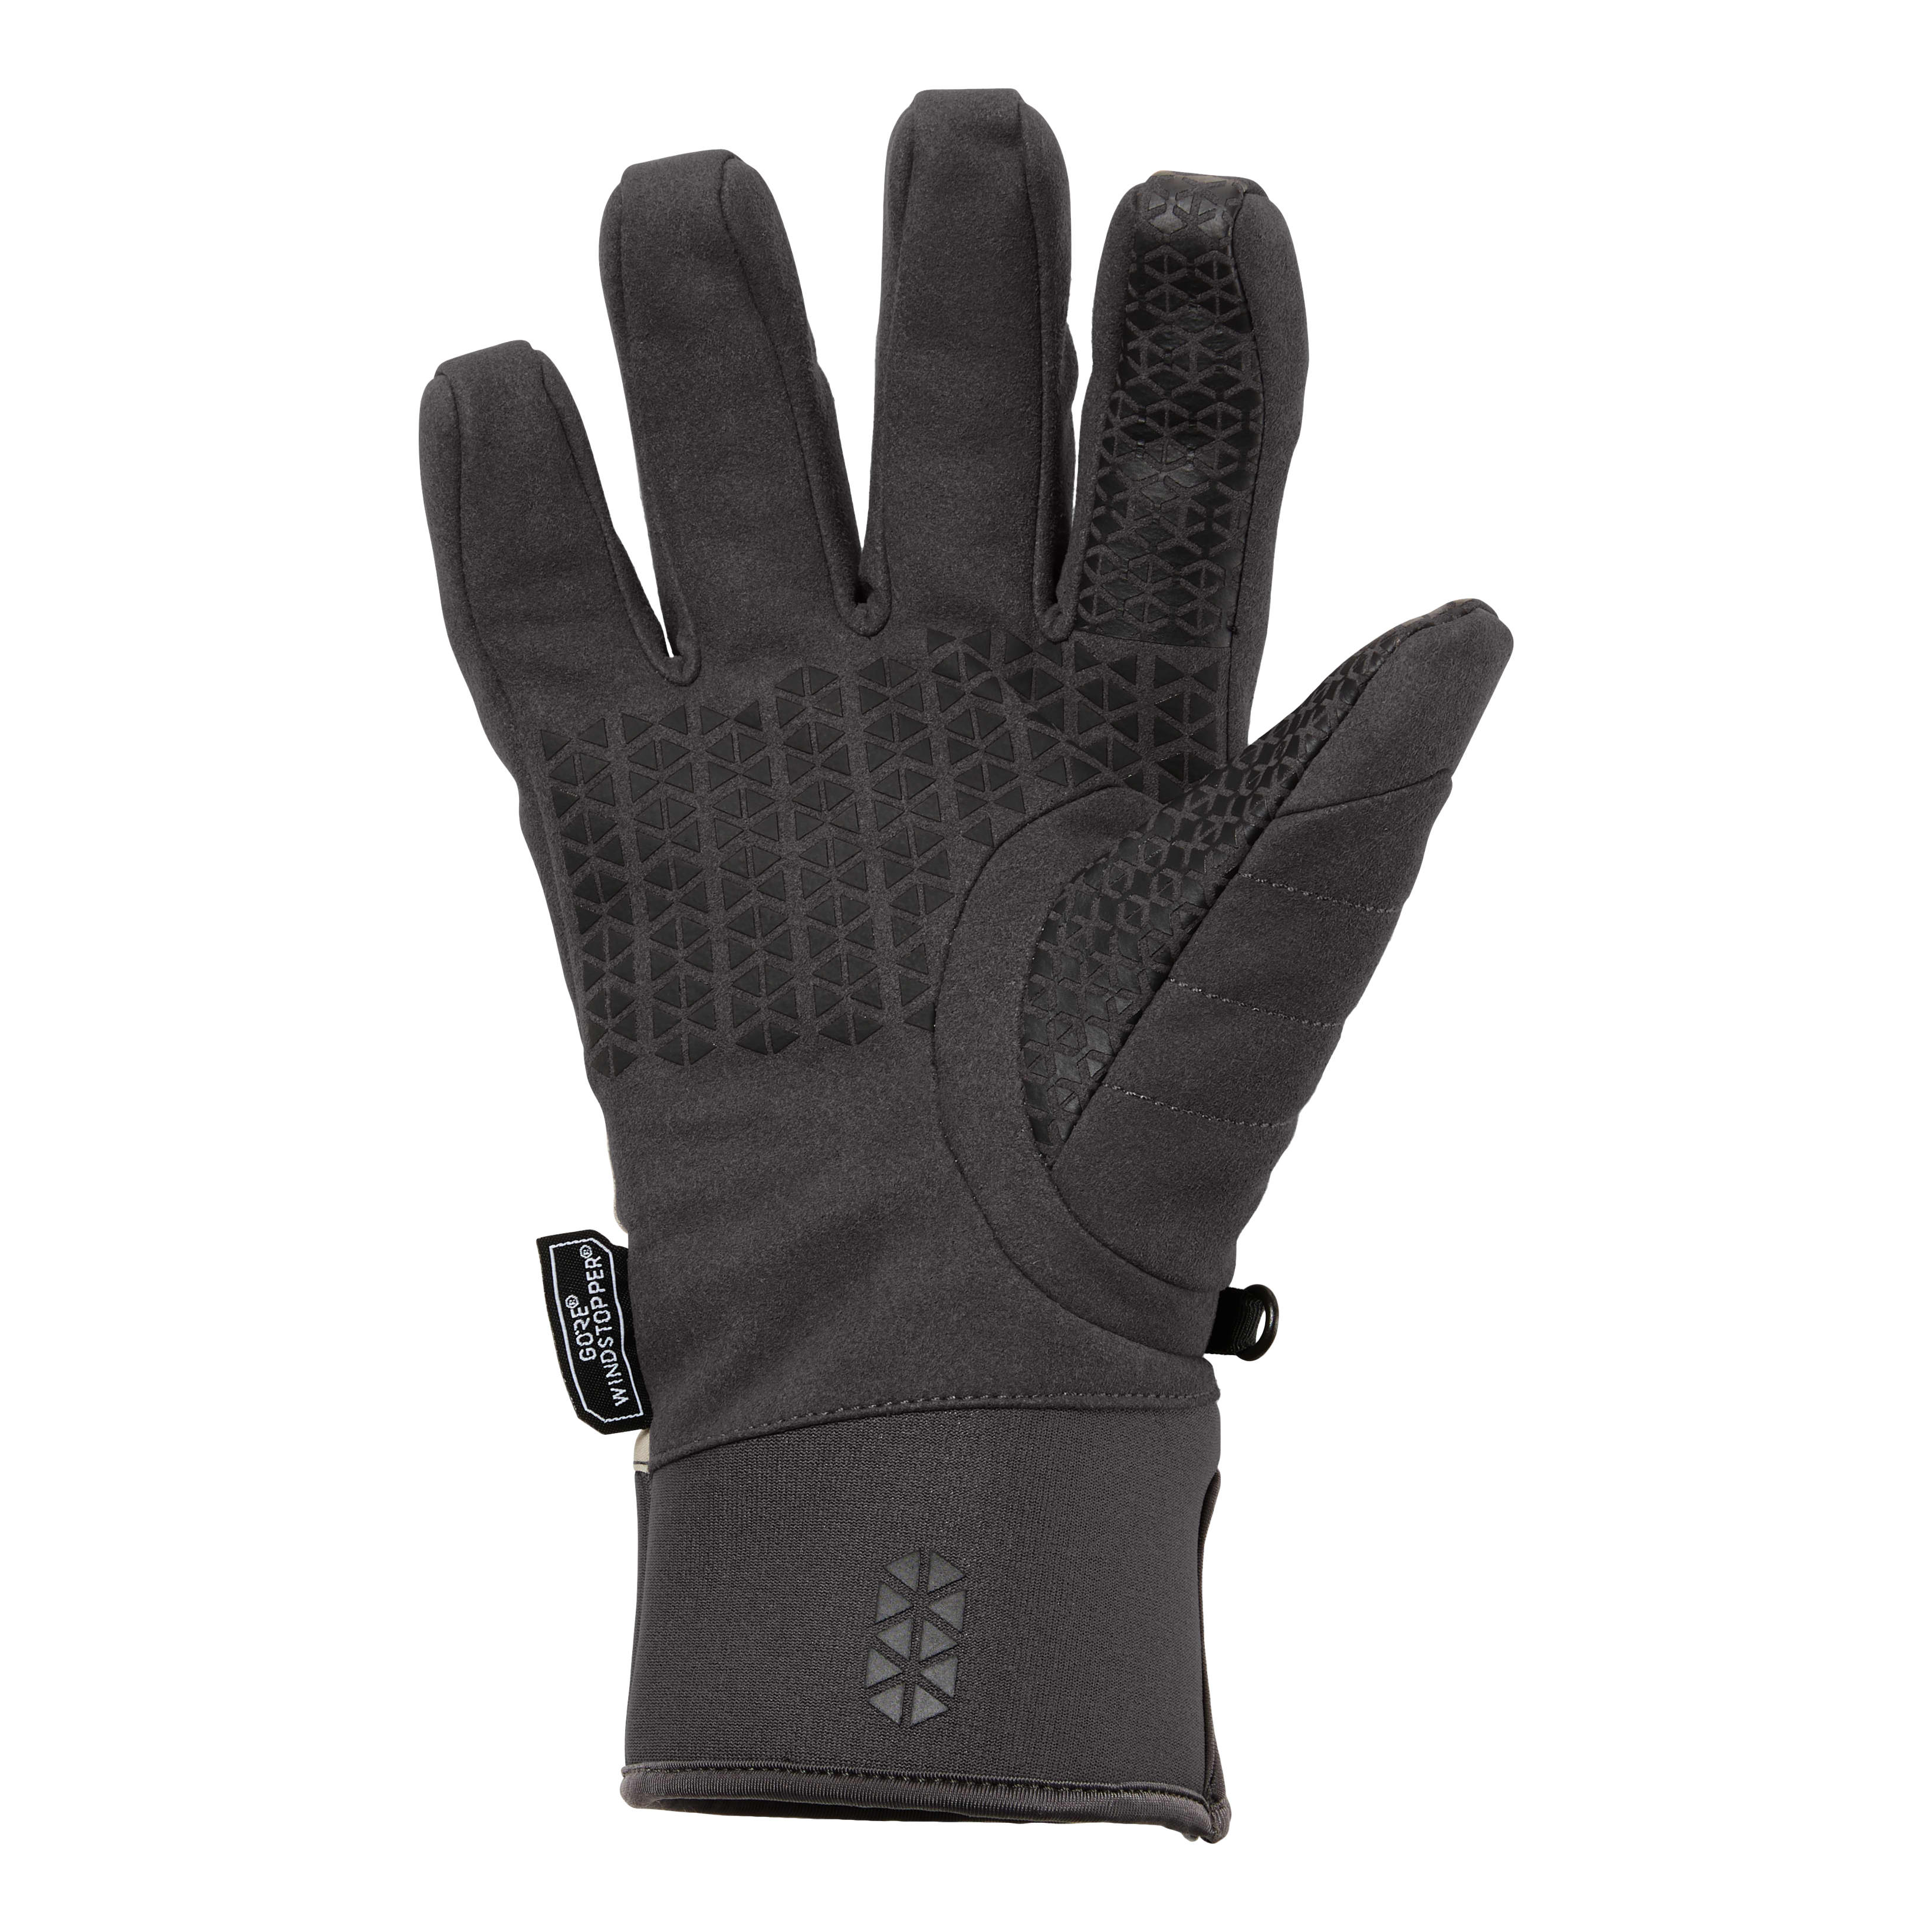 Under Armour® Men’s Mid Season Hunting Gloves - Ridge Reaper Barren/Charcoal